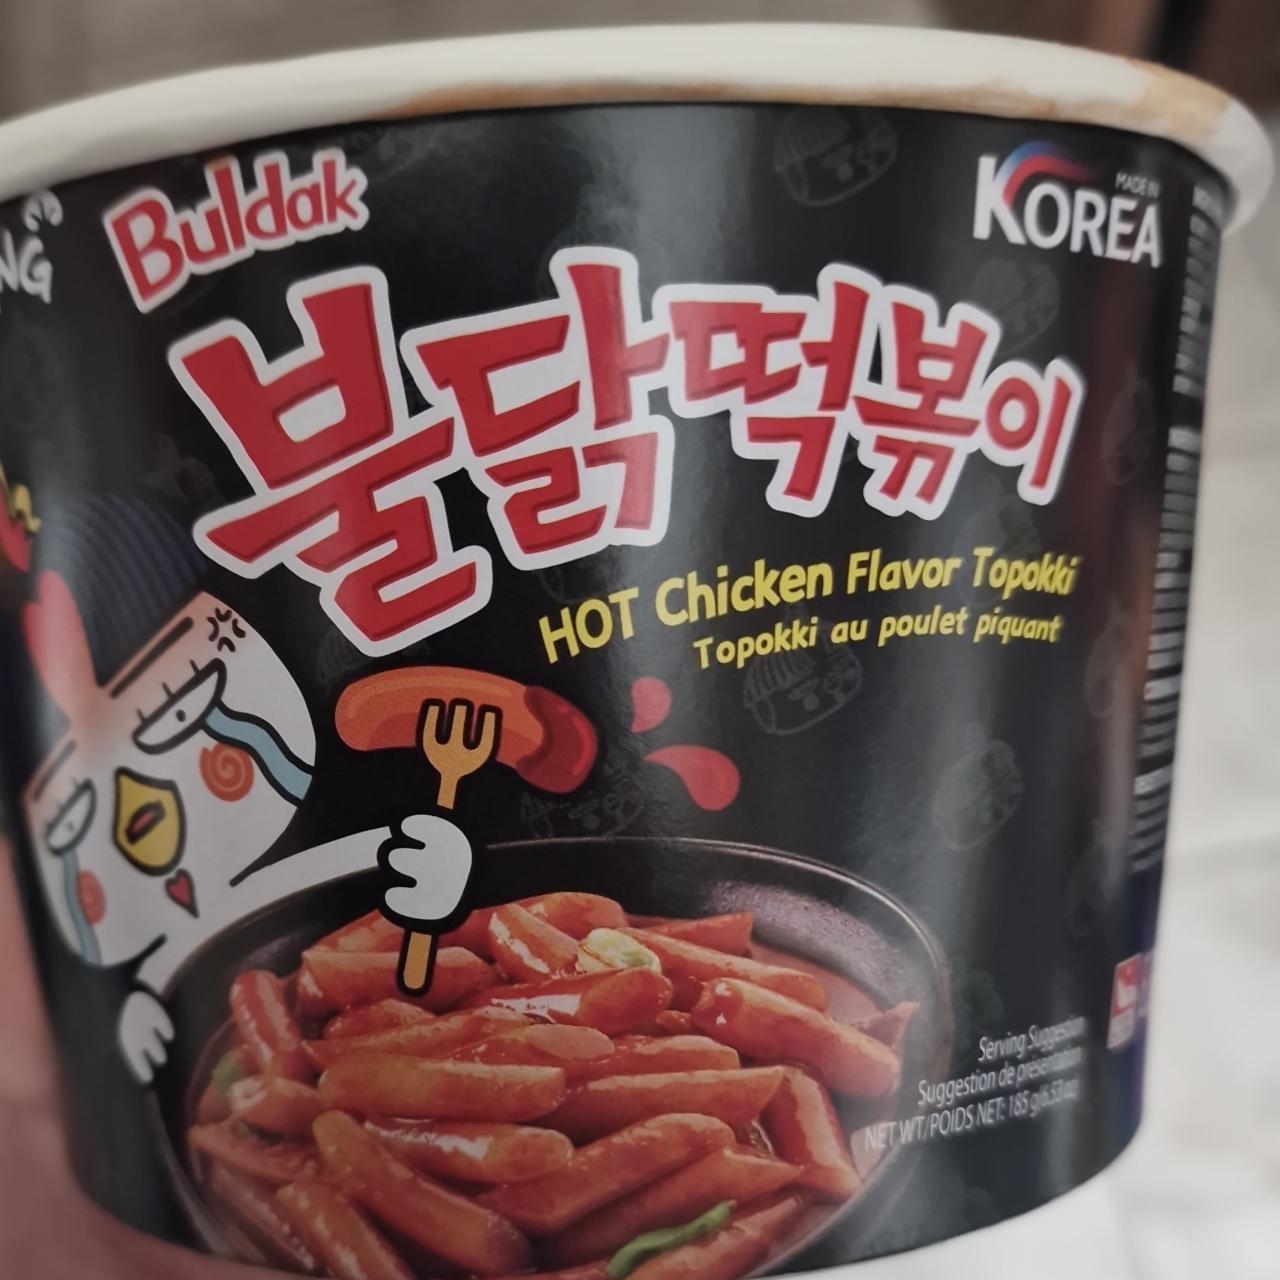 Képek - Buldak Hot chicken flavour topokki Samyang